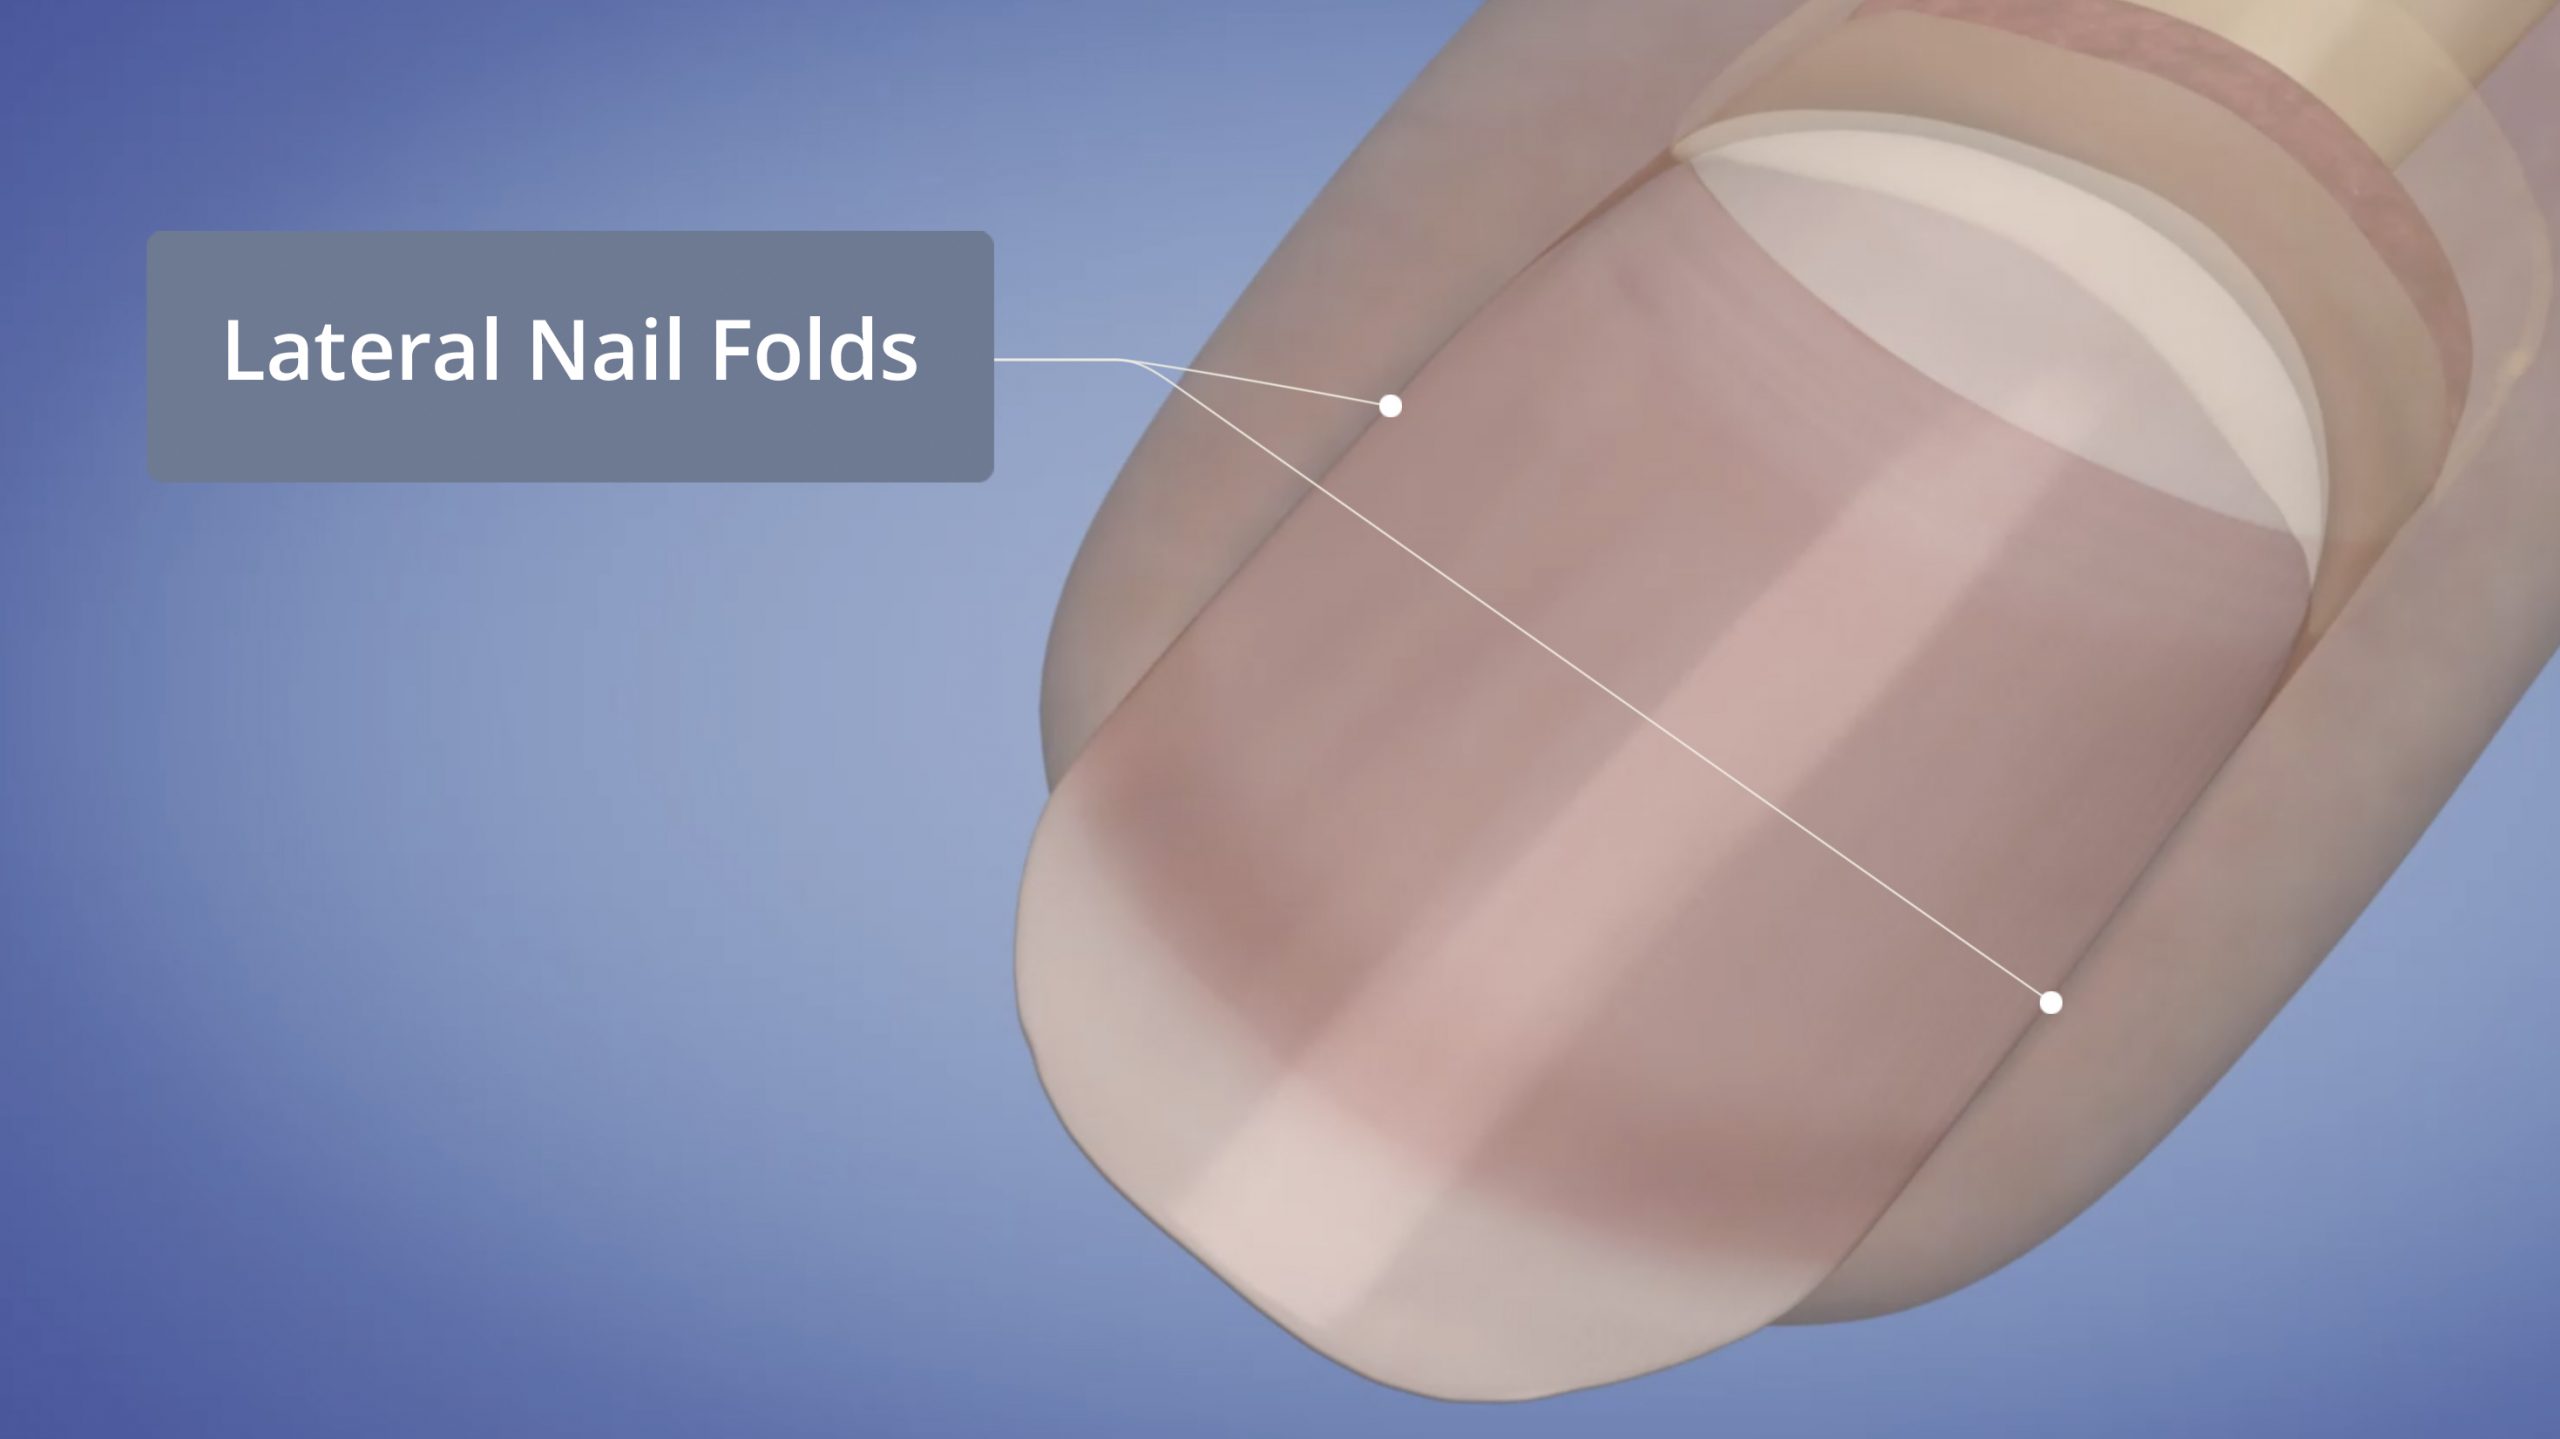 Lateral Nail Folds